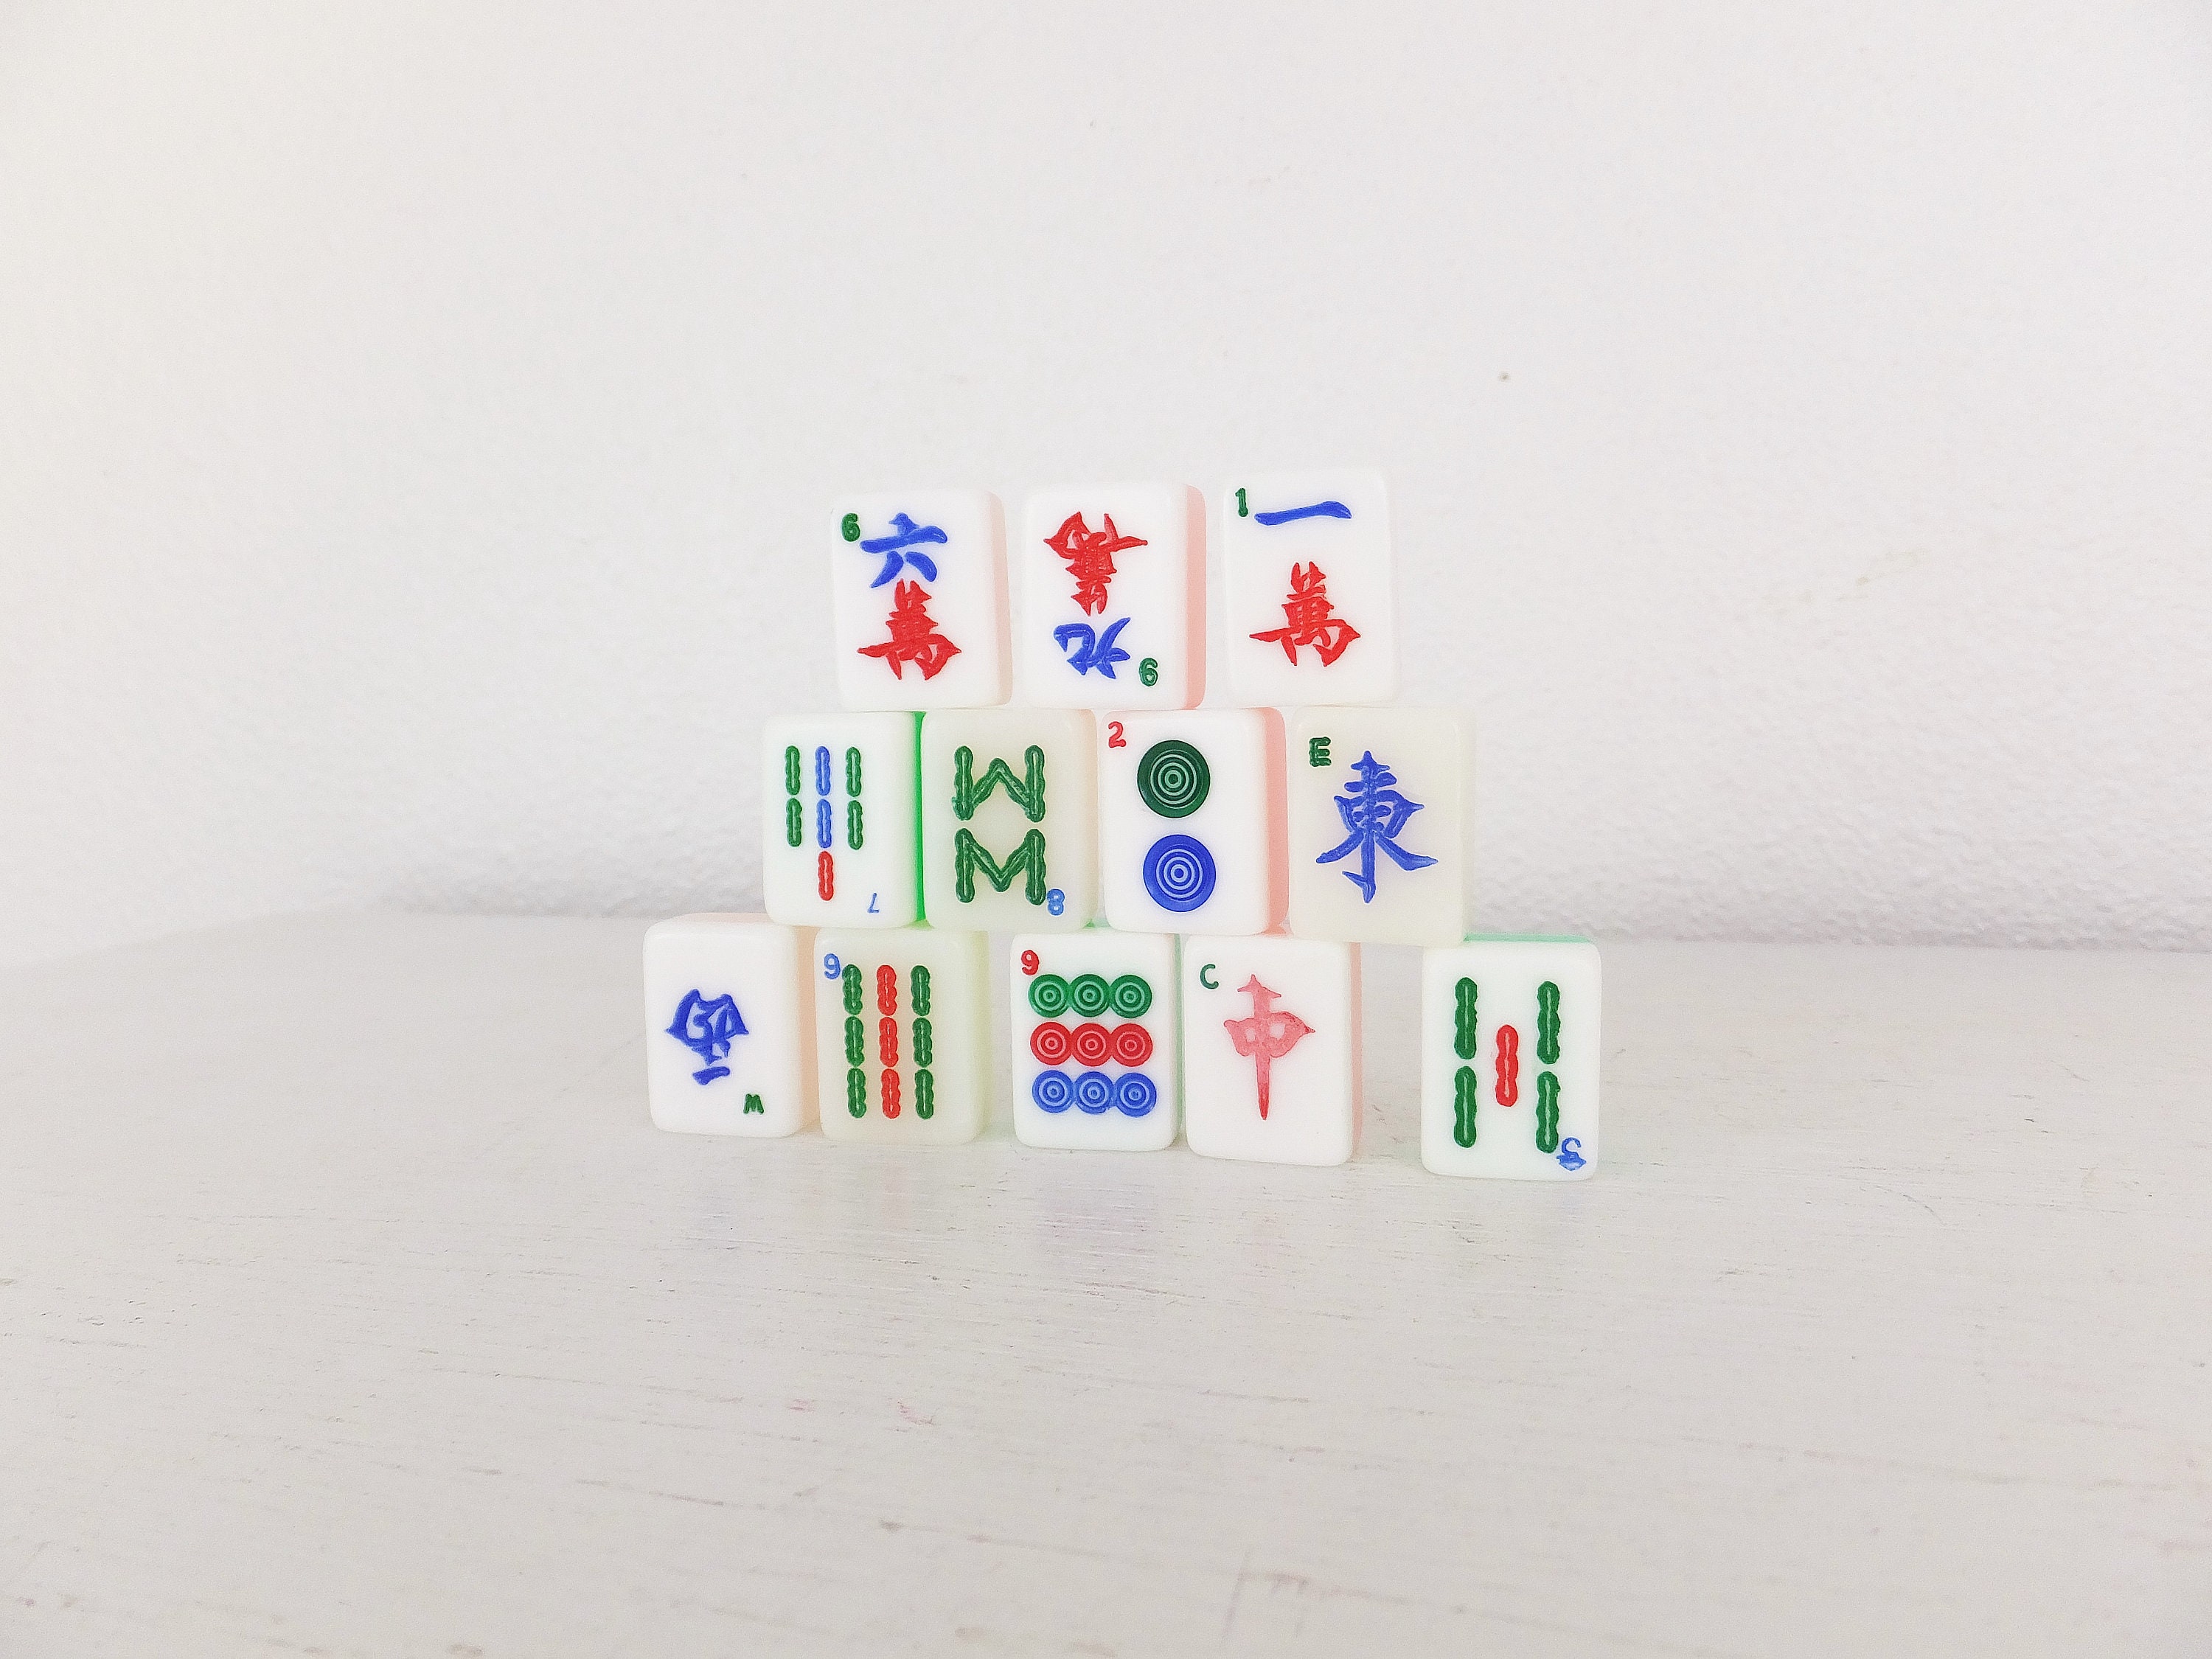 American mahjong - Wikipedia